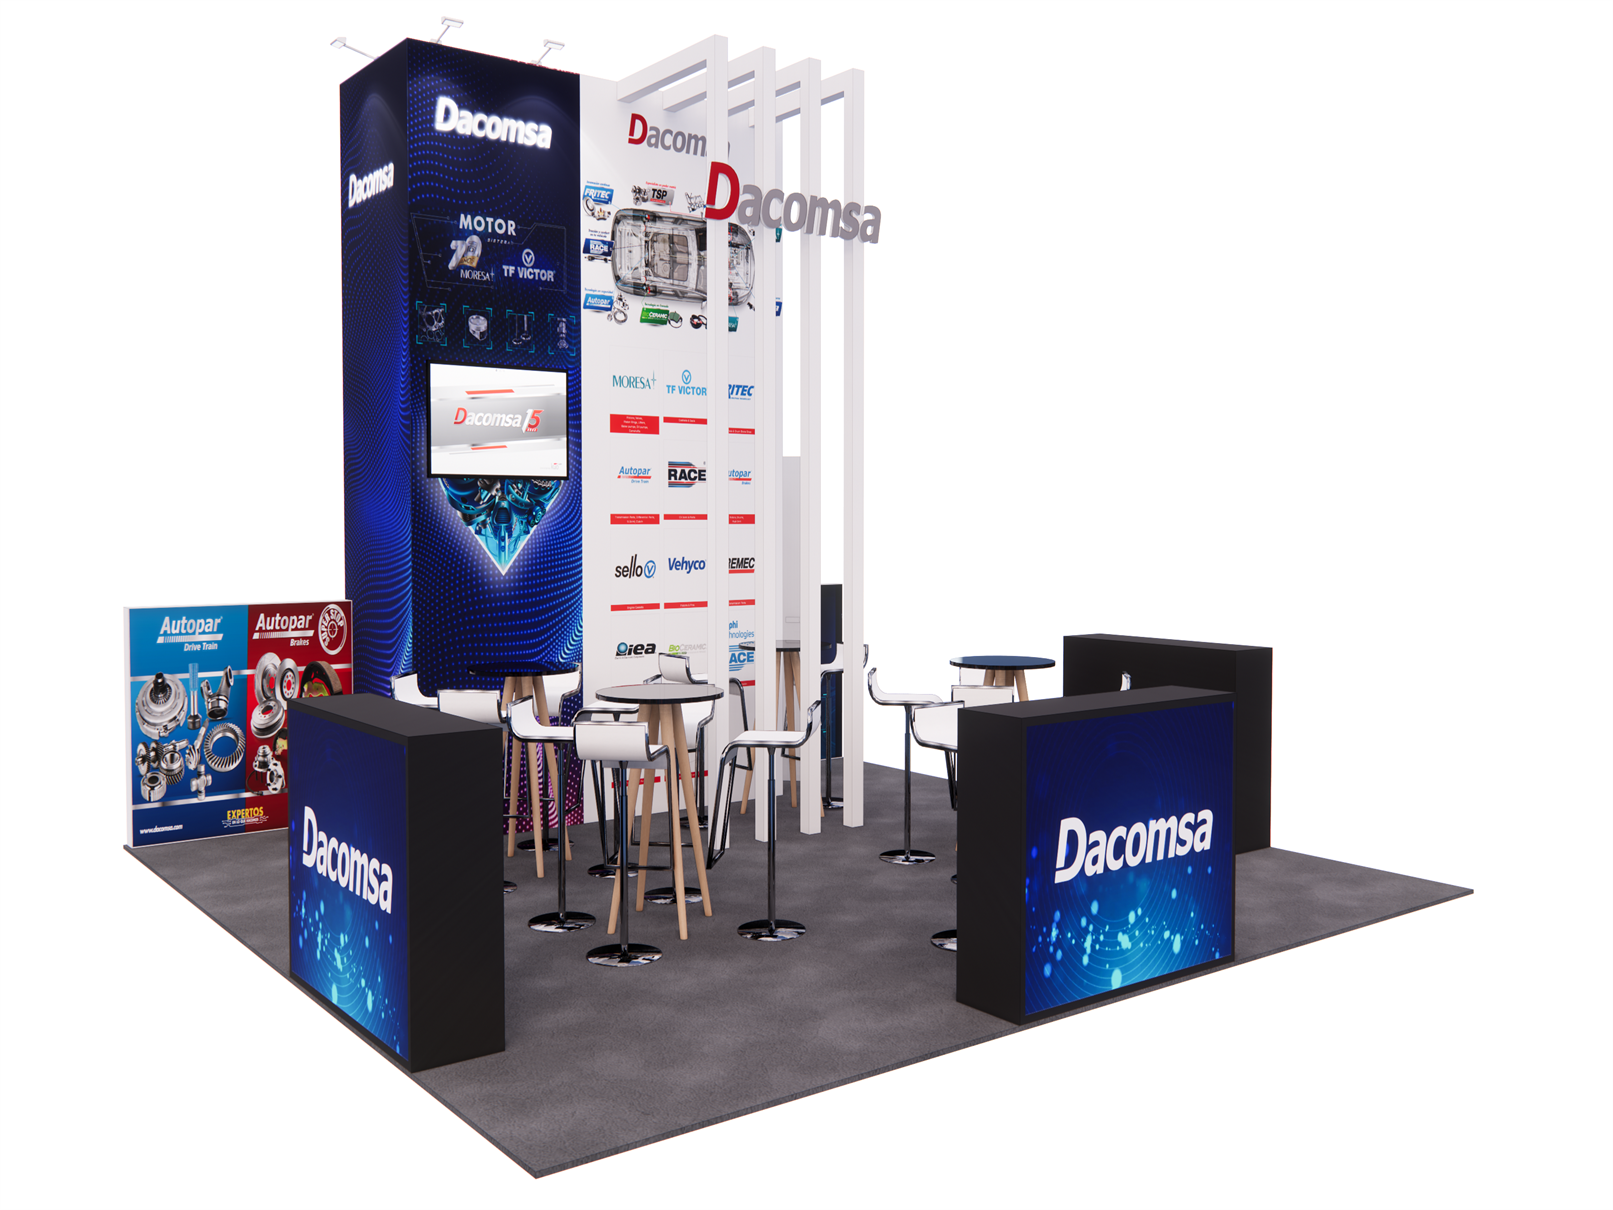 Dacomsa 20′ x 20′ SEMA Show Booth Design